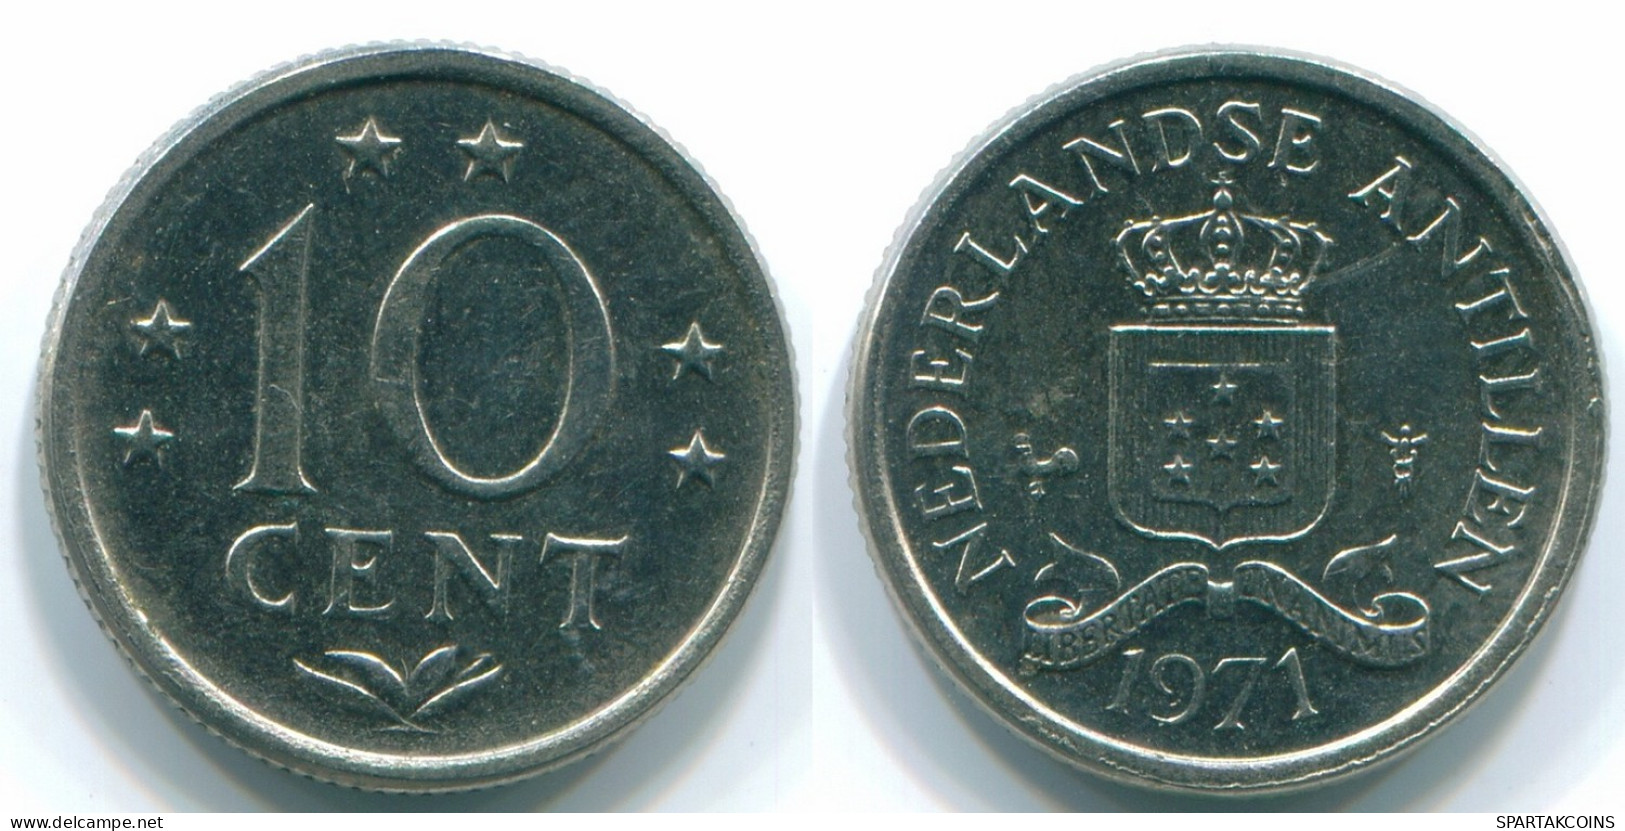 10 CENTS 1971 NETHERLANDS ANTILLES Nickel Colonial Coin #S13424.U.A - Nederlandse Antillen